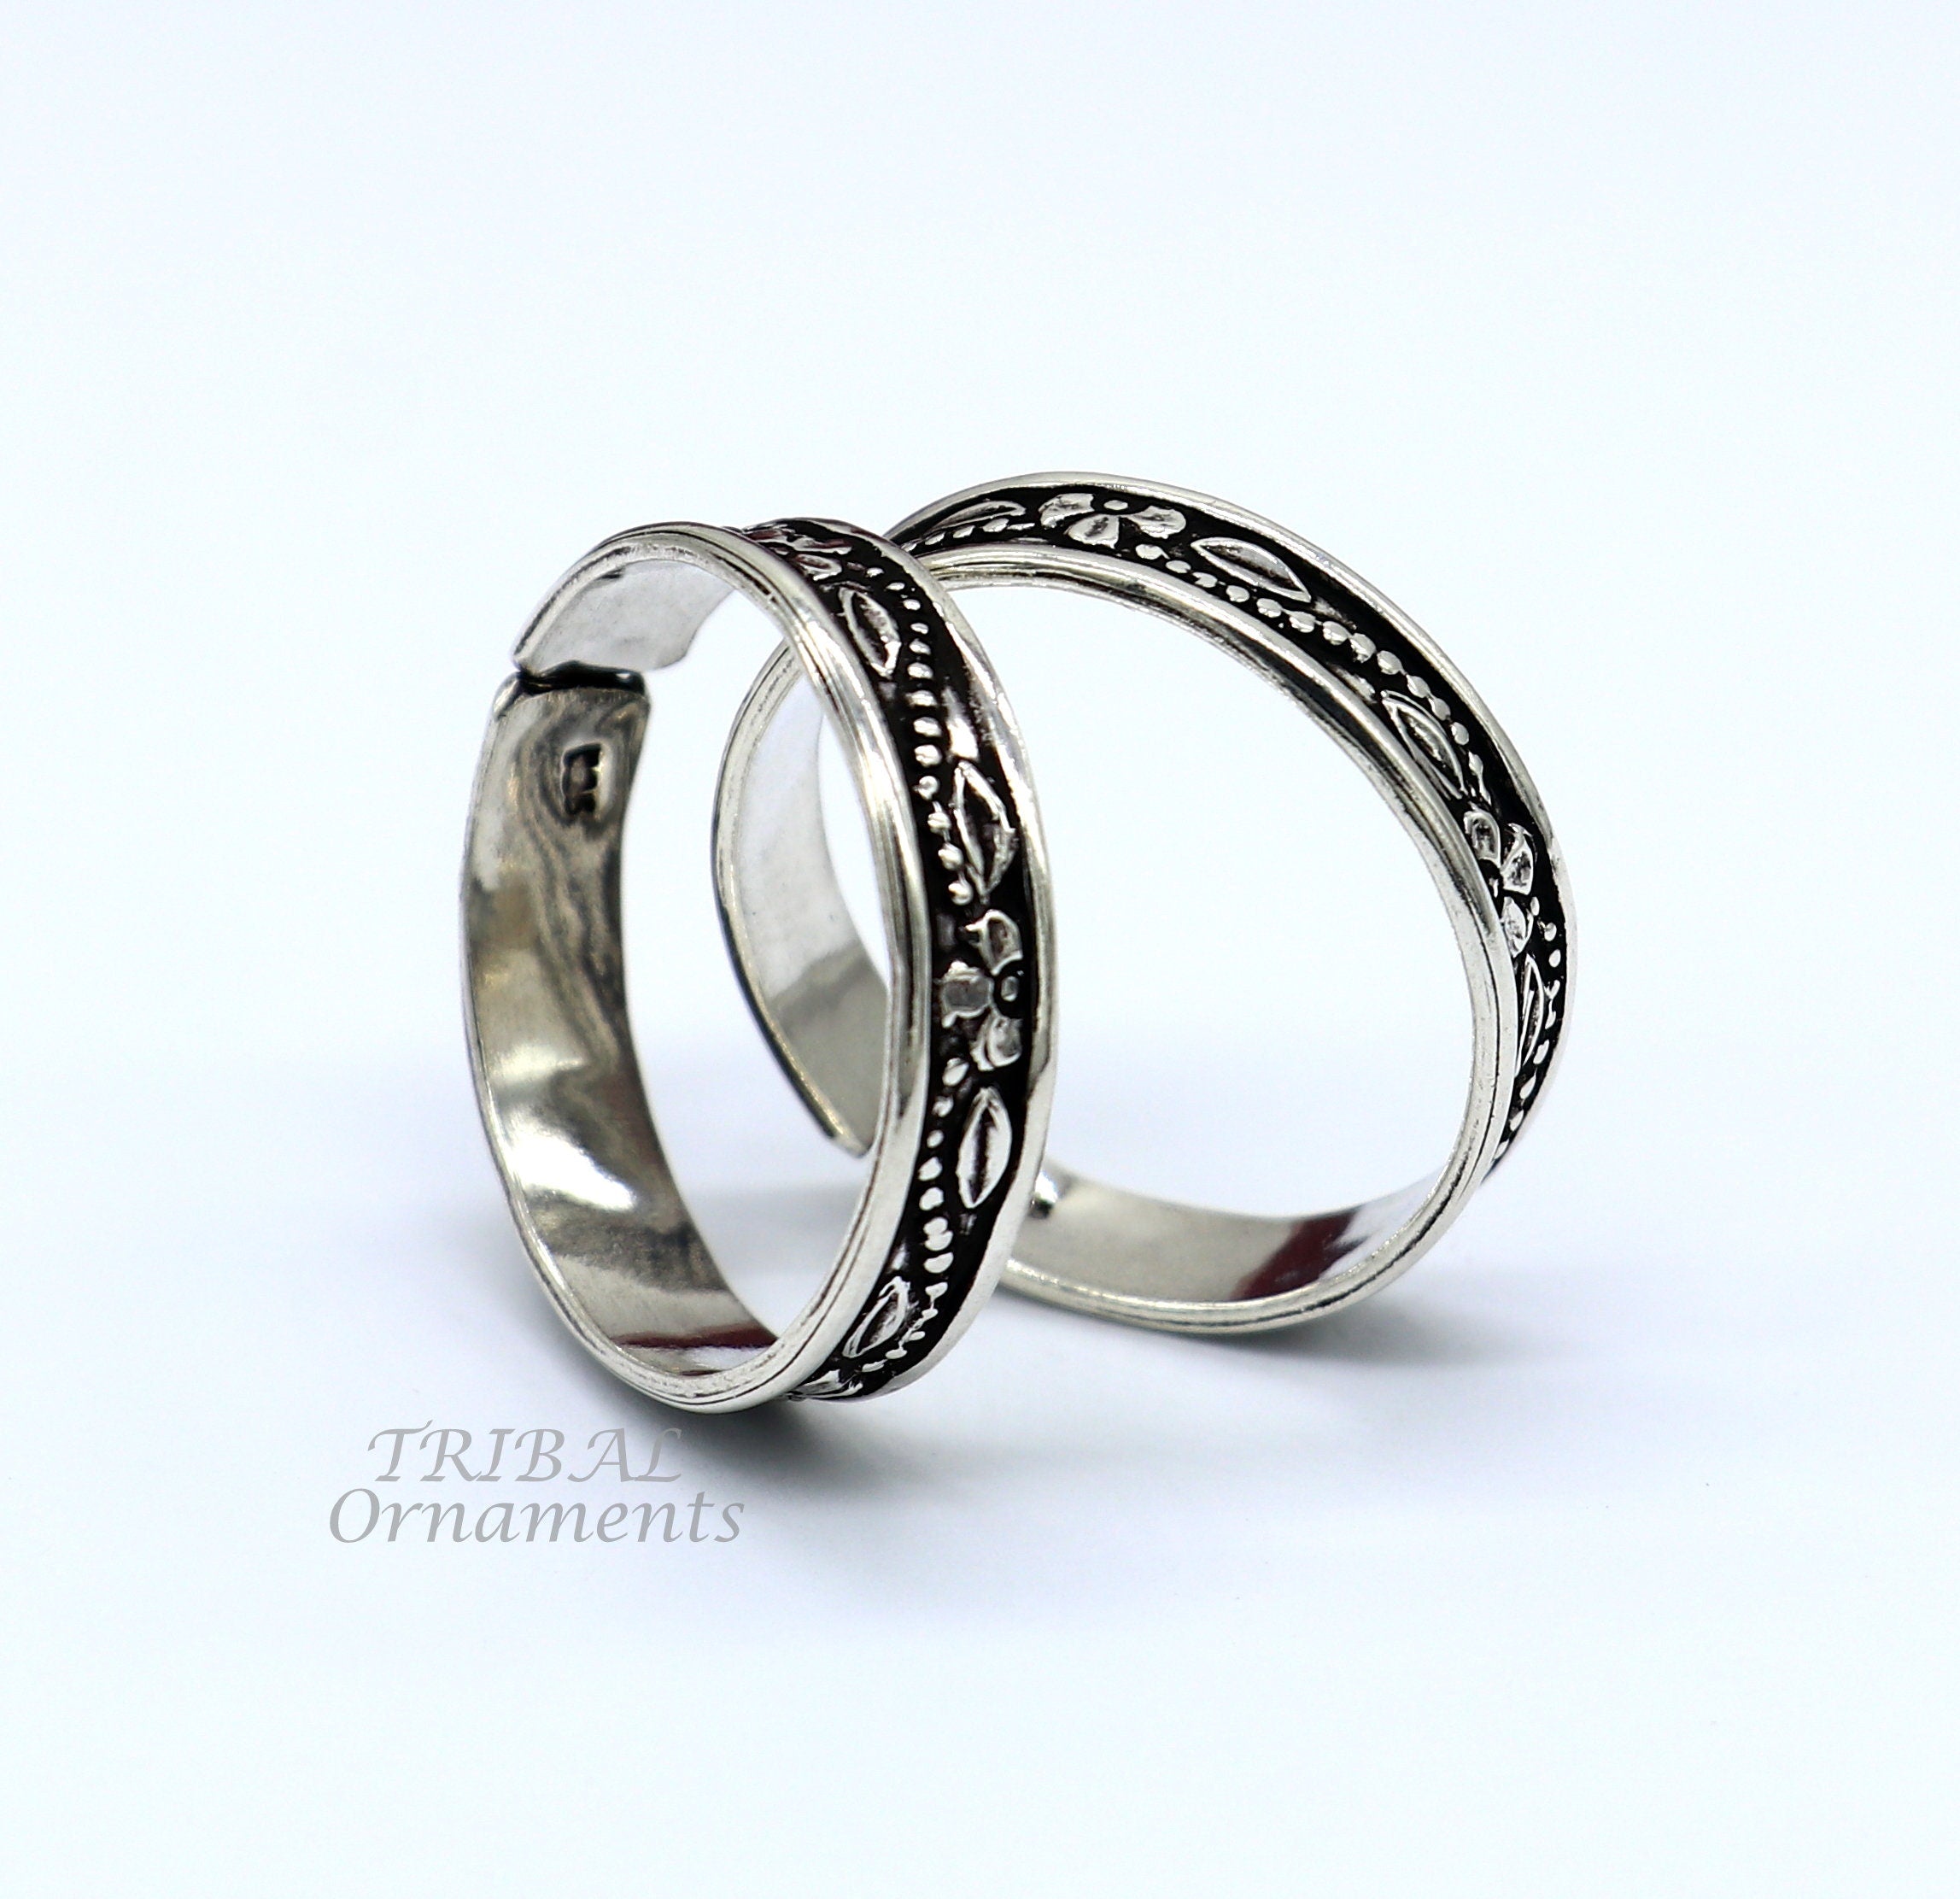 Thumb Rings Ring - Buy Thumb Rings Ring online in India